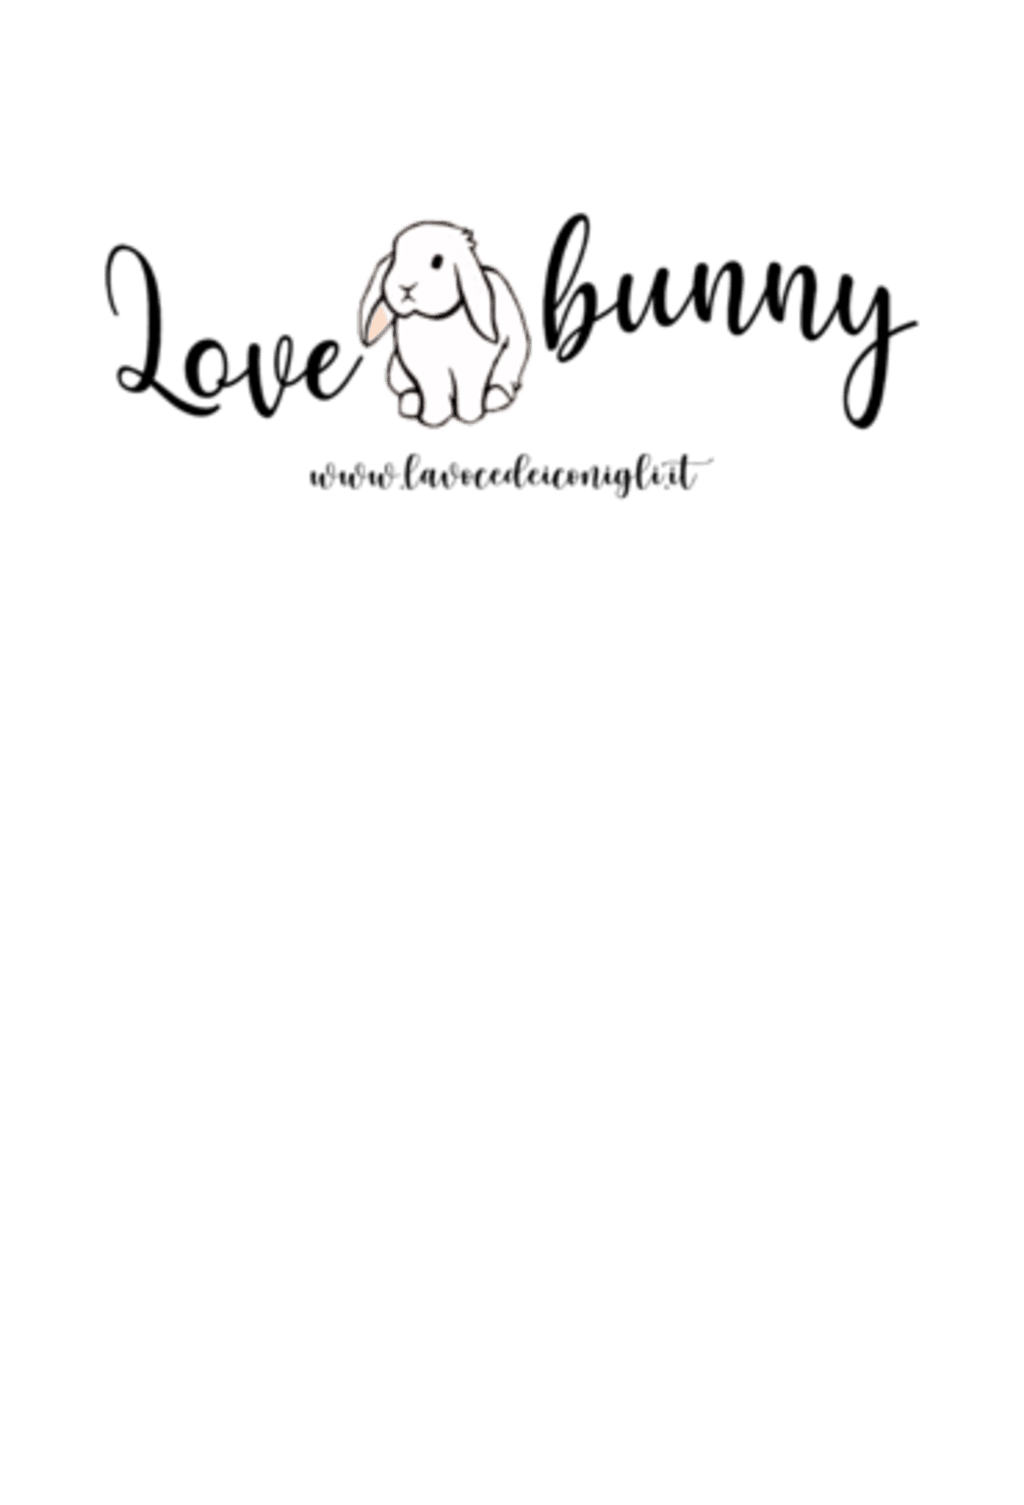 Love bunny 3